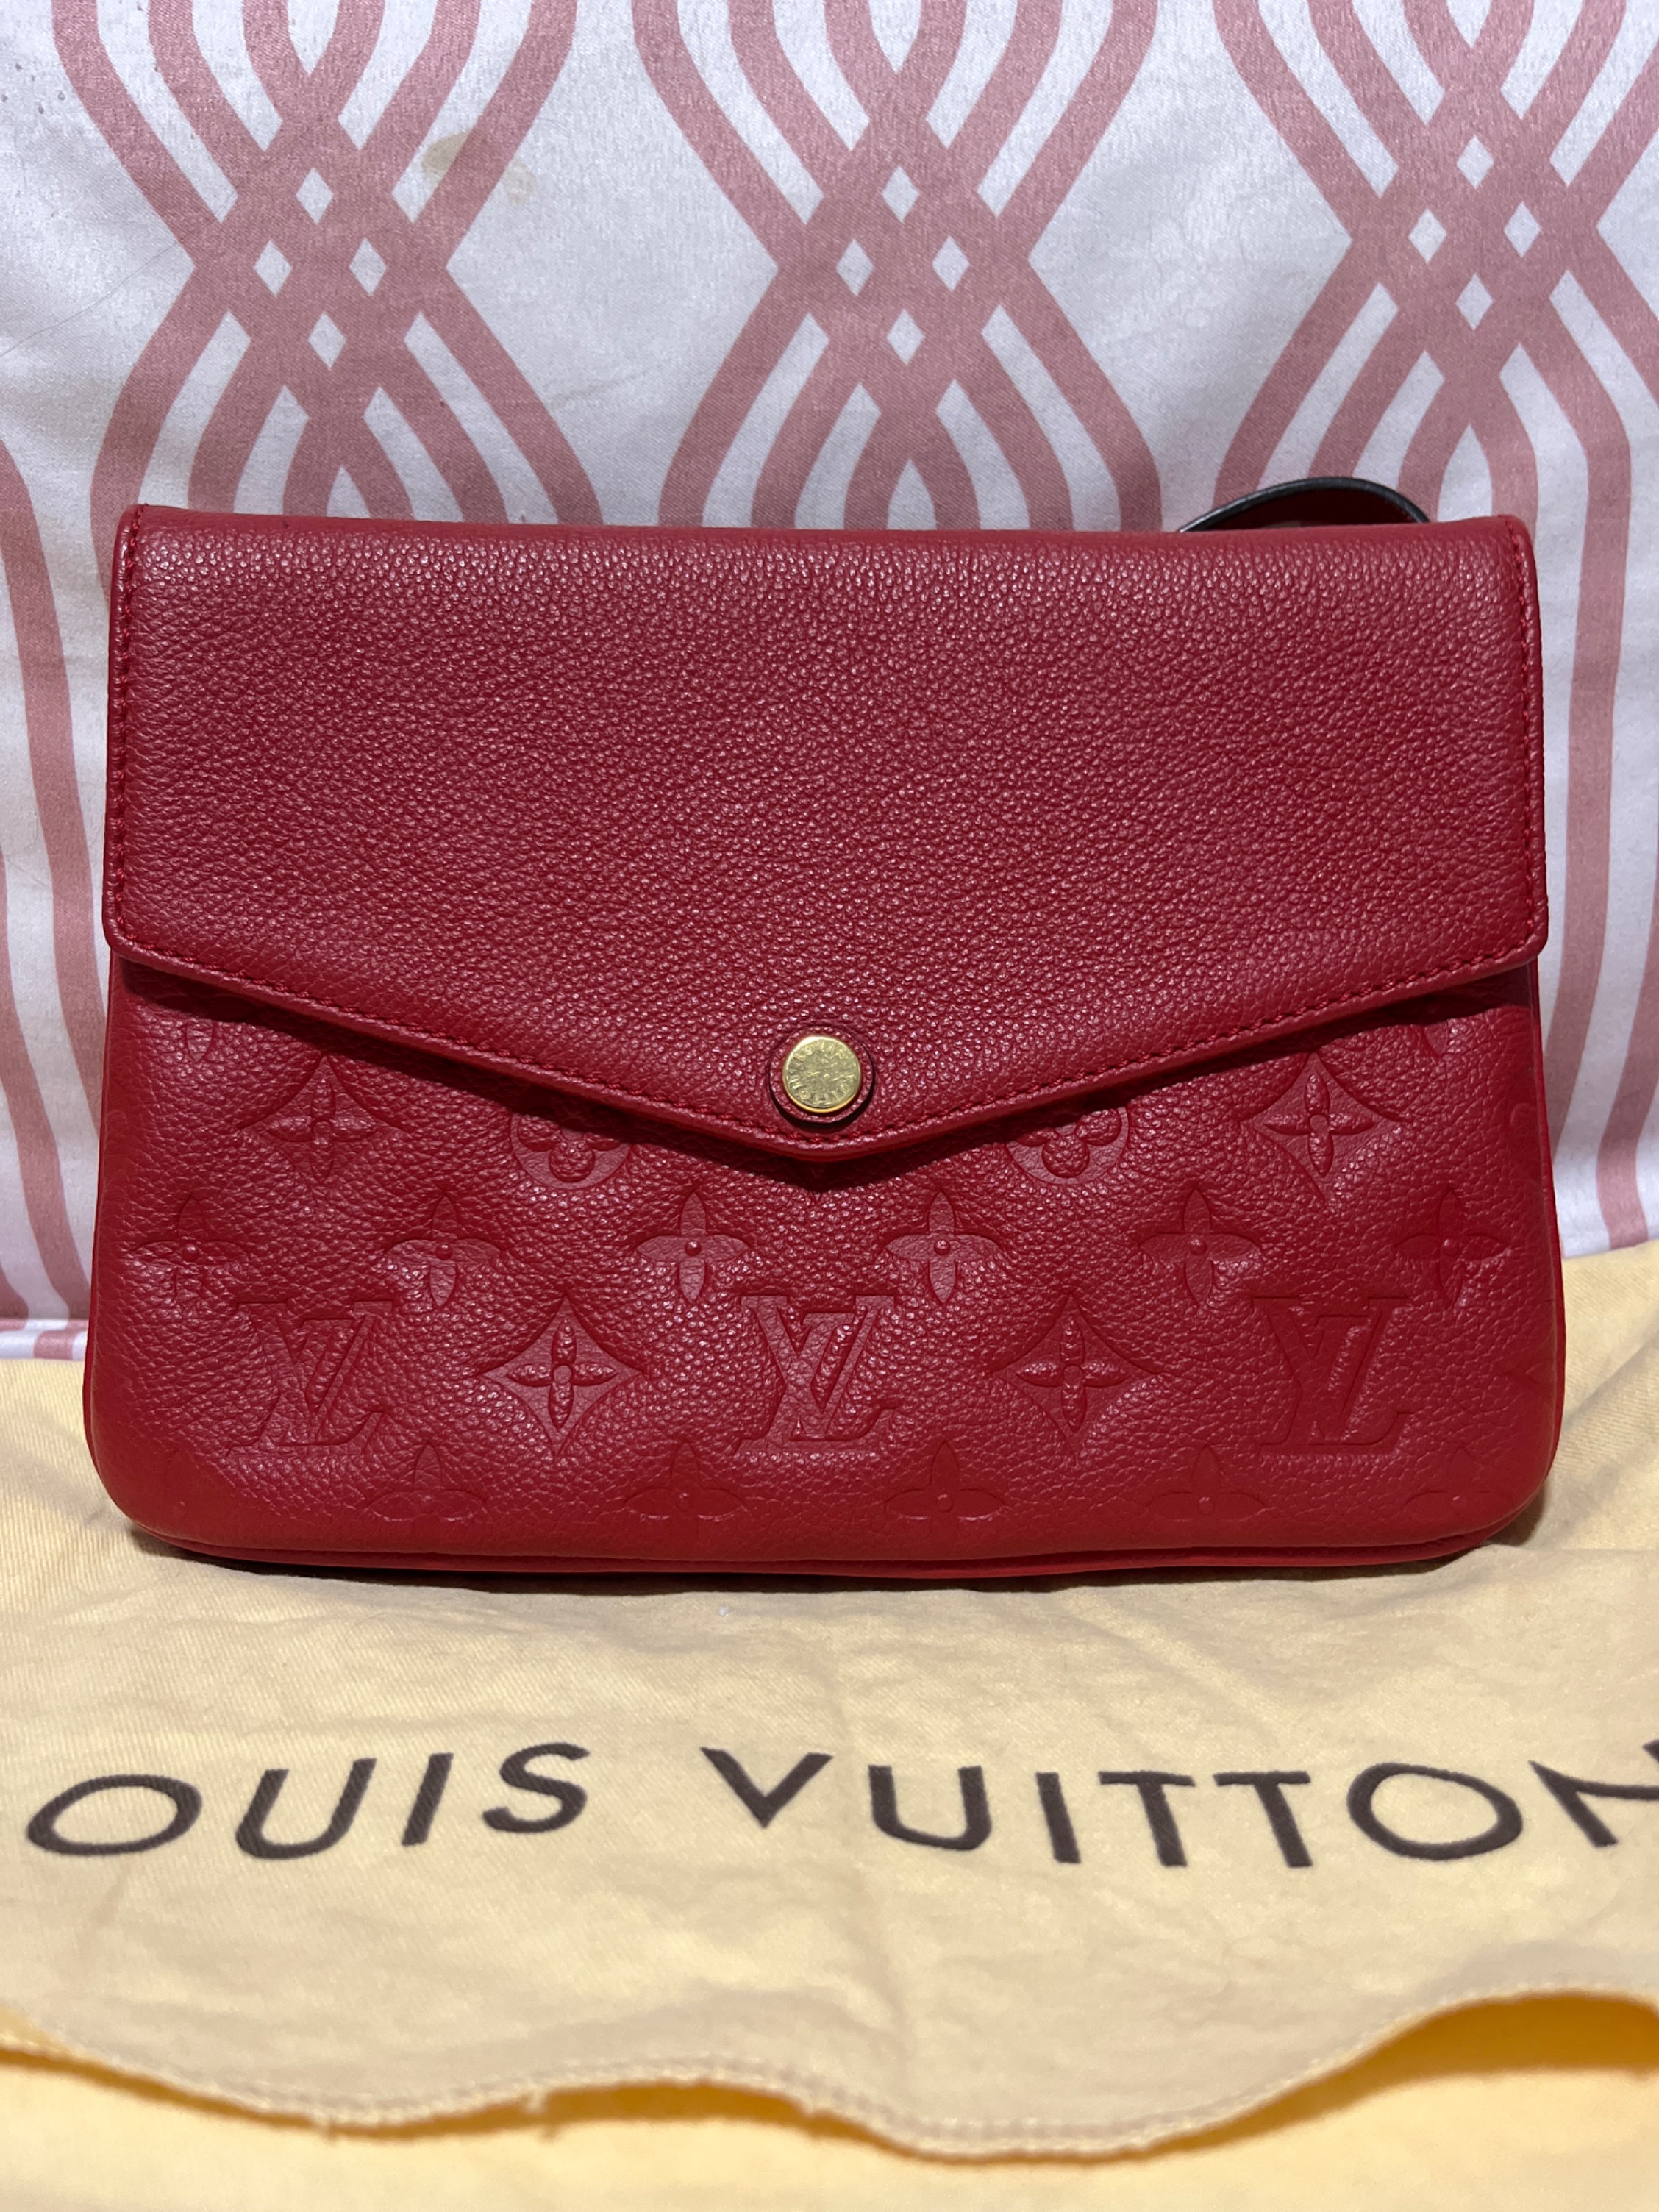 035vintage - Louis Vuitton Twinset Twice Empreinte Bag - pink!   -twice-empreinte-bag-pink/